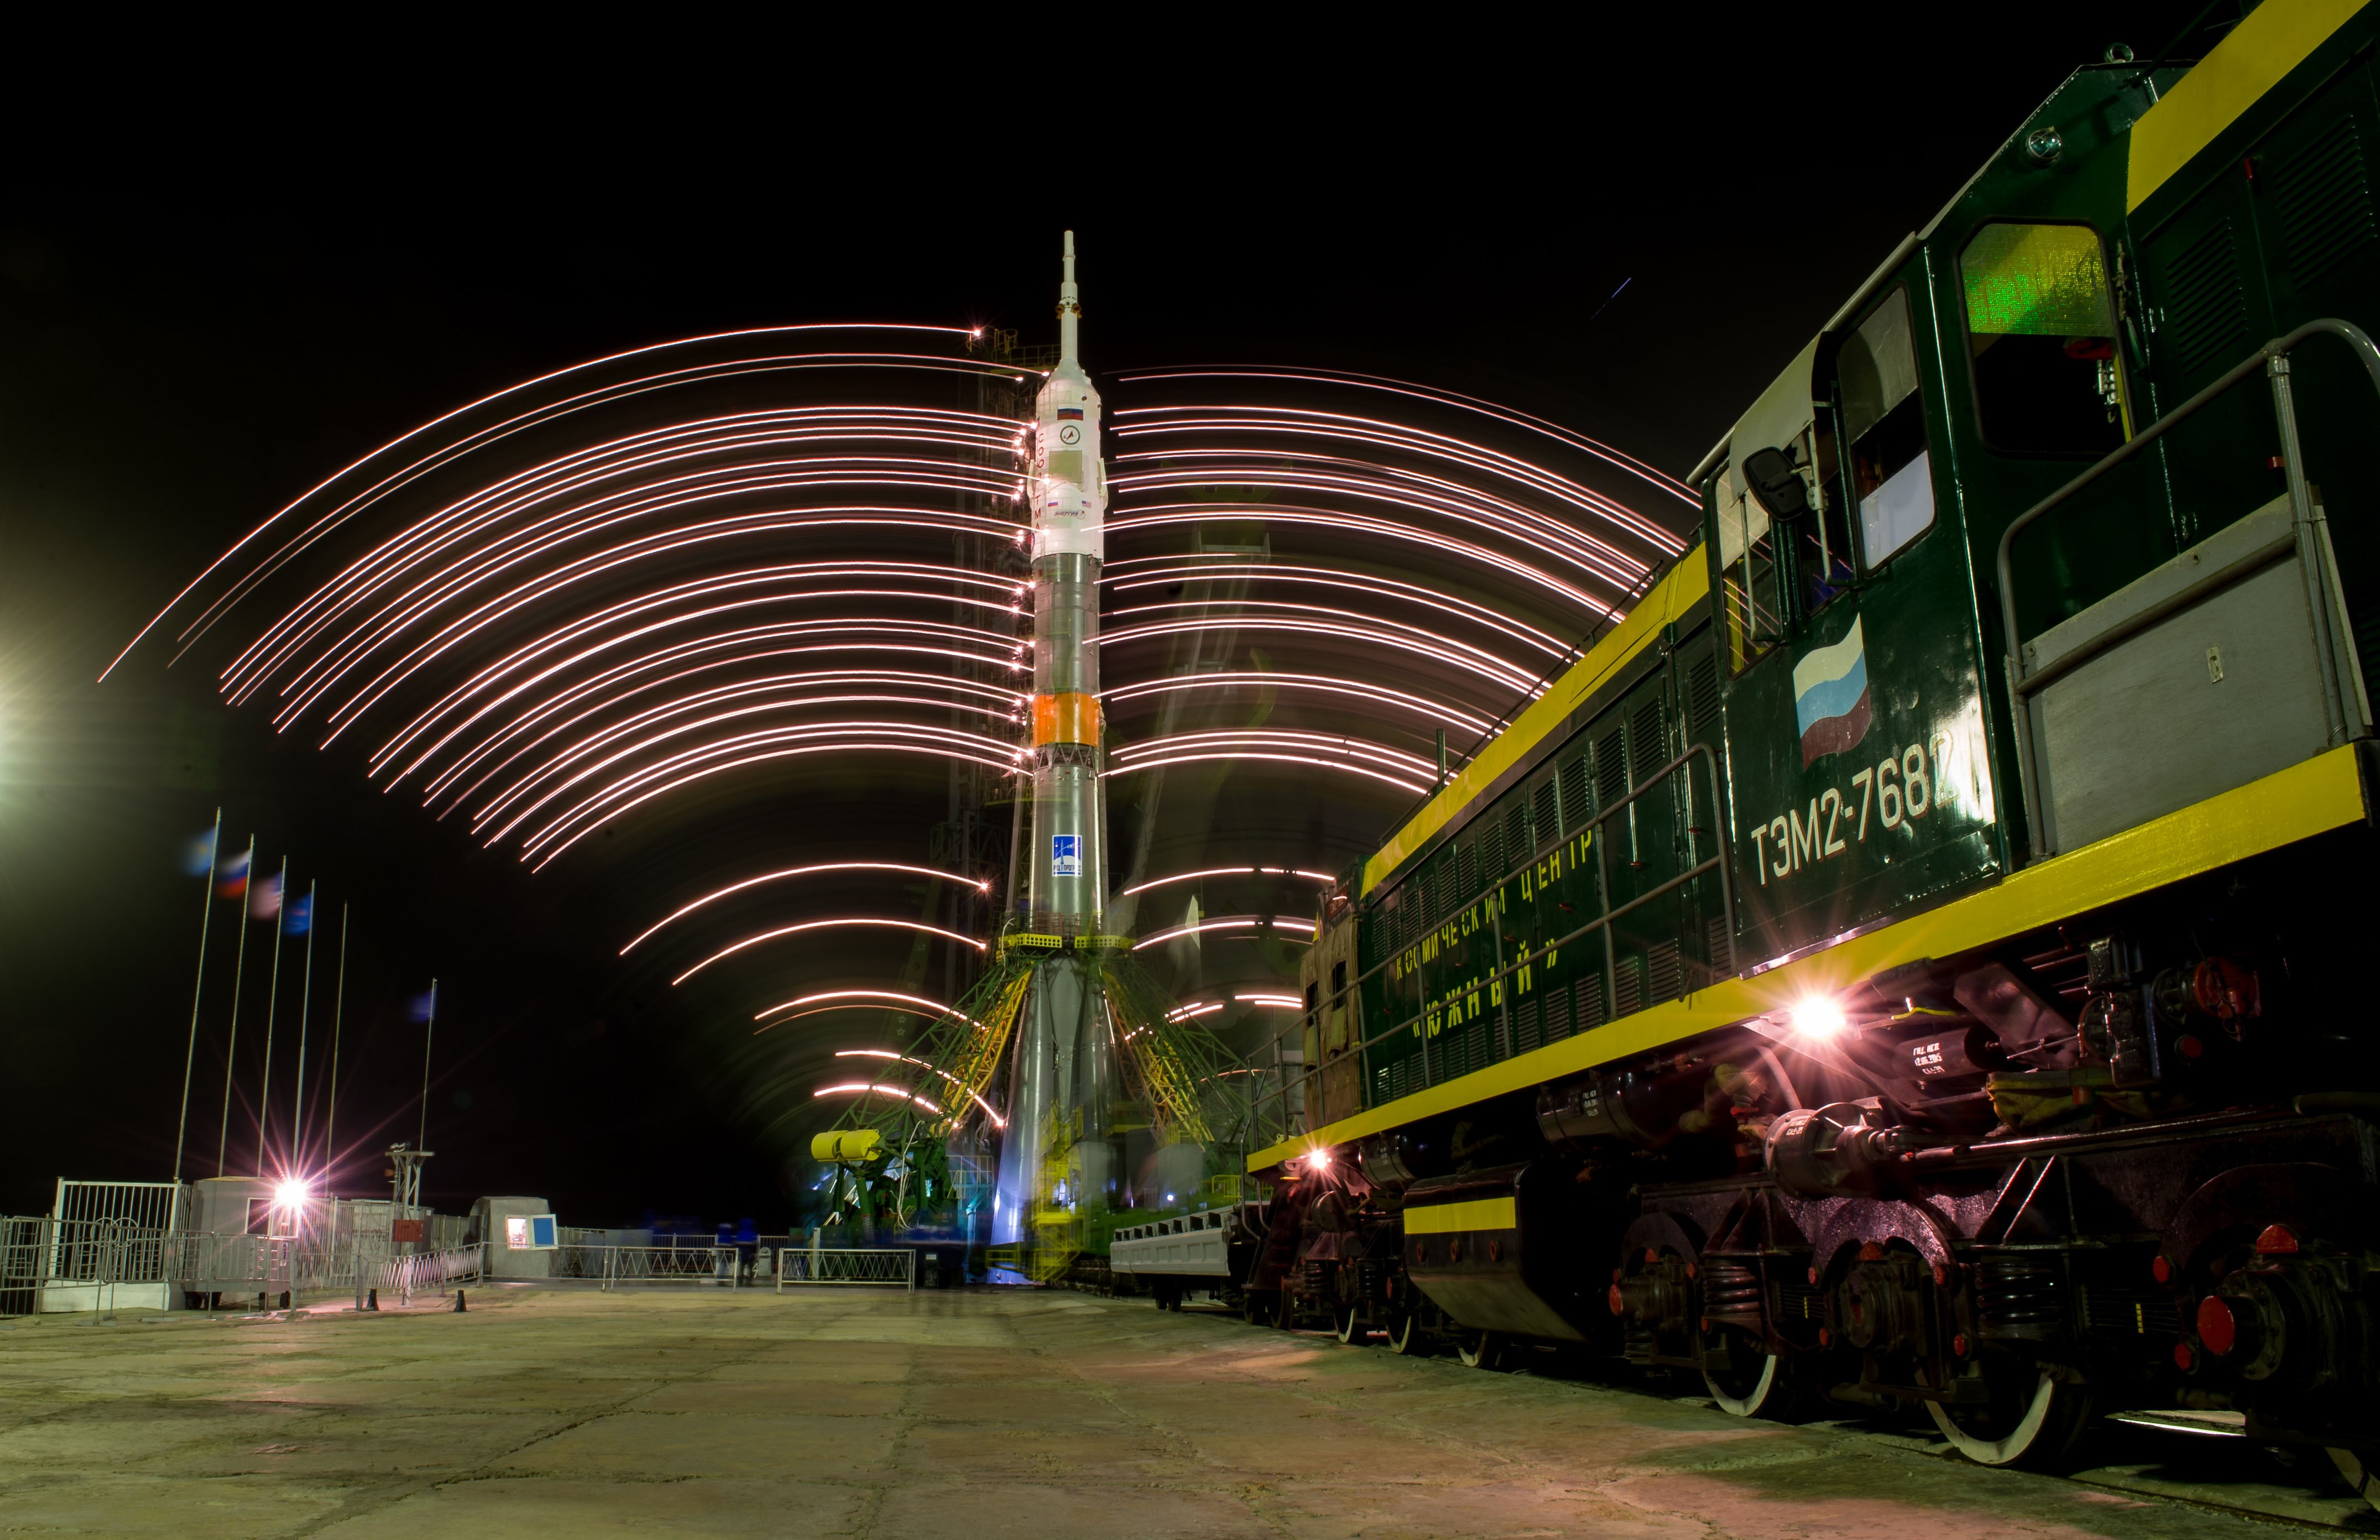 General 4304x2785 night lights train Baikonur Cosmodrome Kazakhstan rocket Russian long exposure light trails Soyuz vehicle numbers